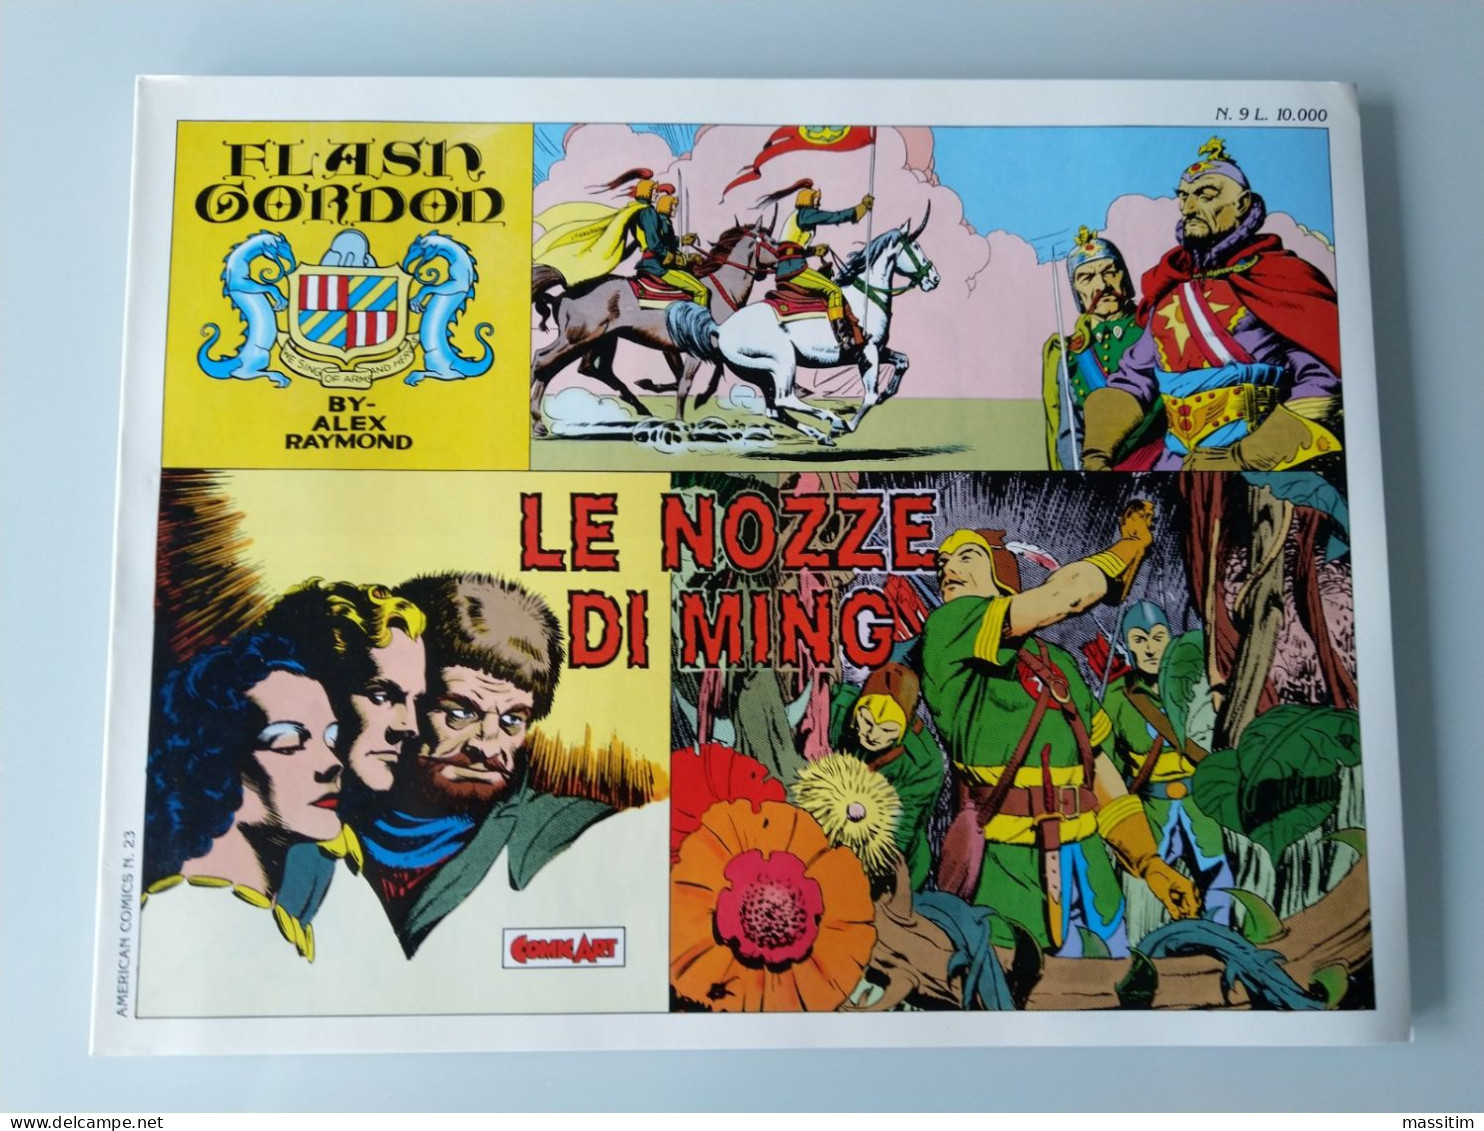 Flash Gordon di Alex Raymond dal n. 1 al n. 10 ( Comic Art 1991-1996 ) Formato orizzontale - Ottimi/Edicola.